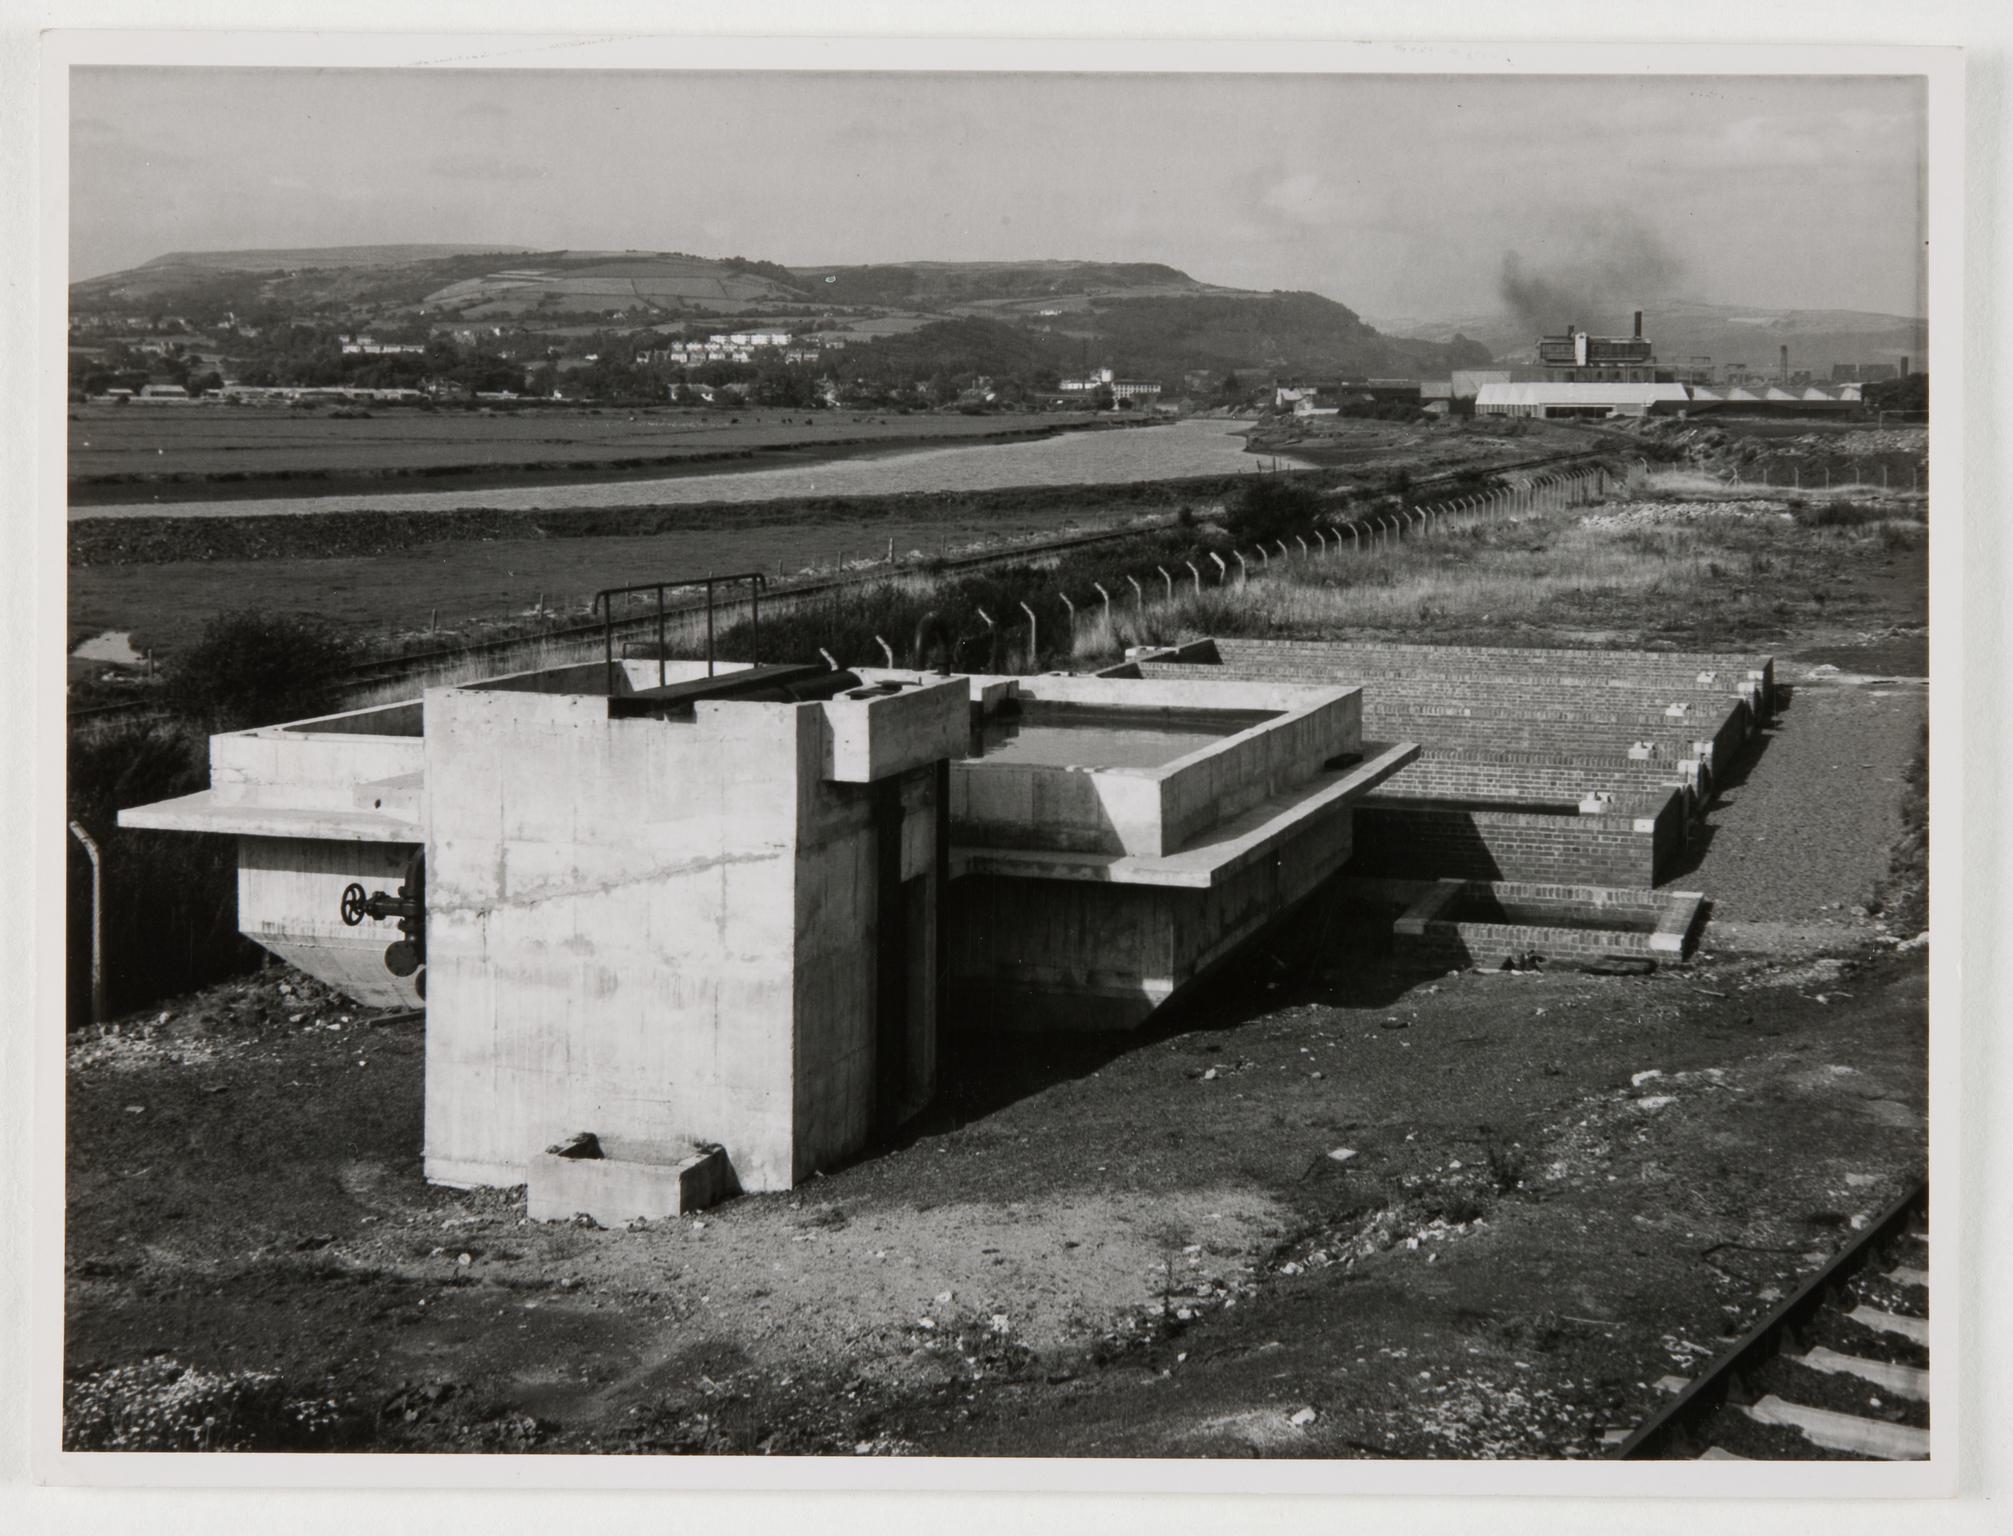 Metal Box factory, photograph